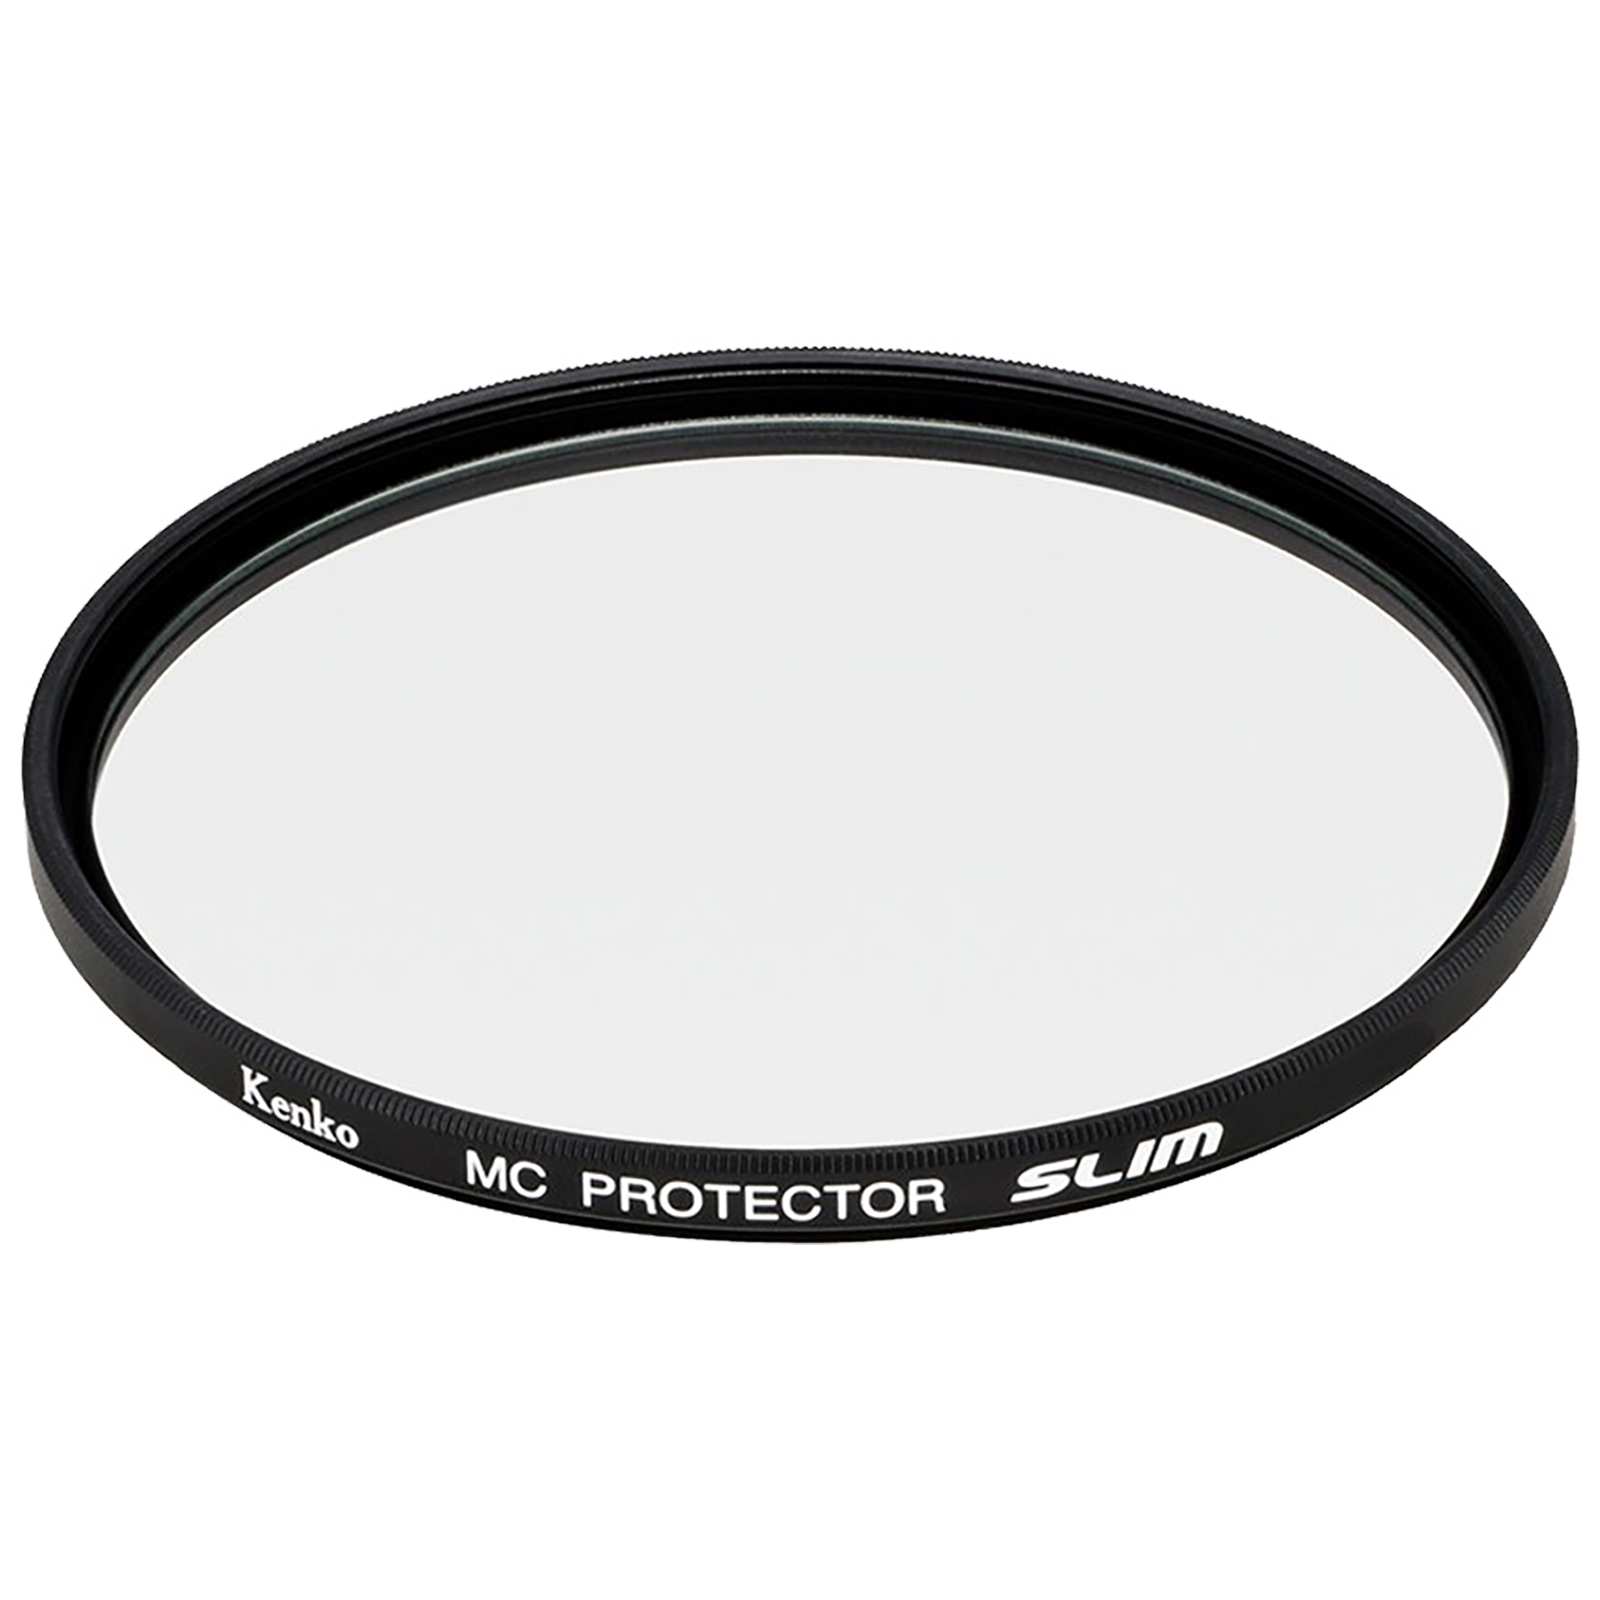 Kenko Protector 72mm Multi Coated Lens Filter (Ultra Thin, 237294, Black)_1